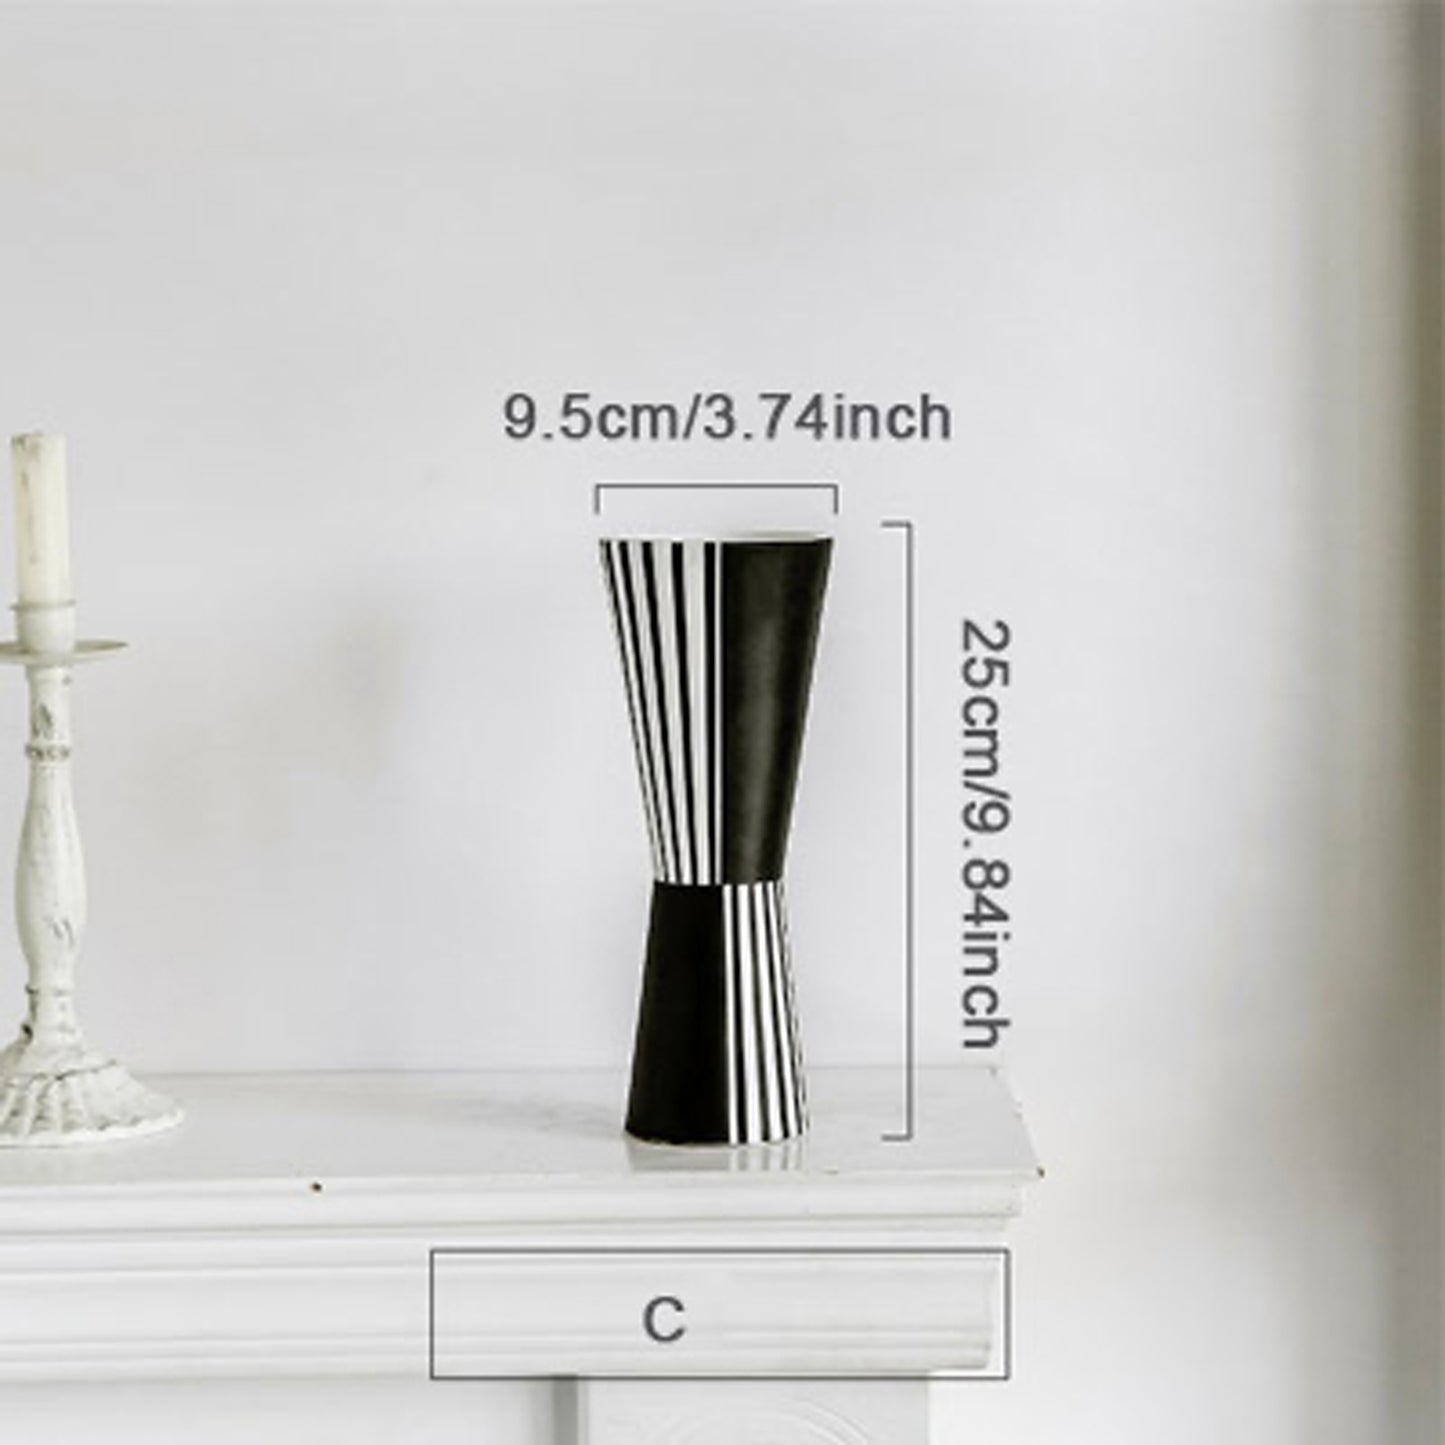 Black & White Geometric Motif Ceramic Vase